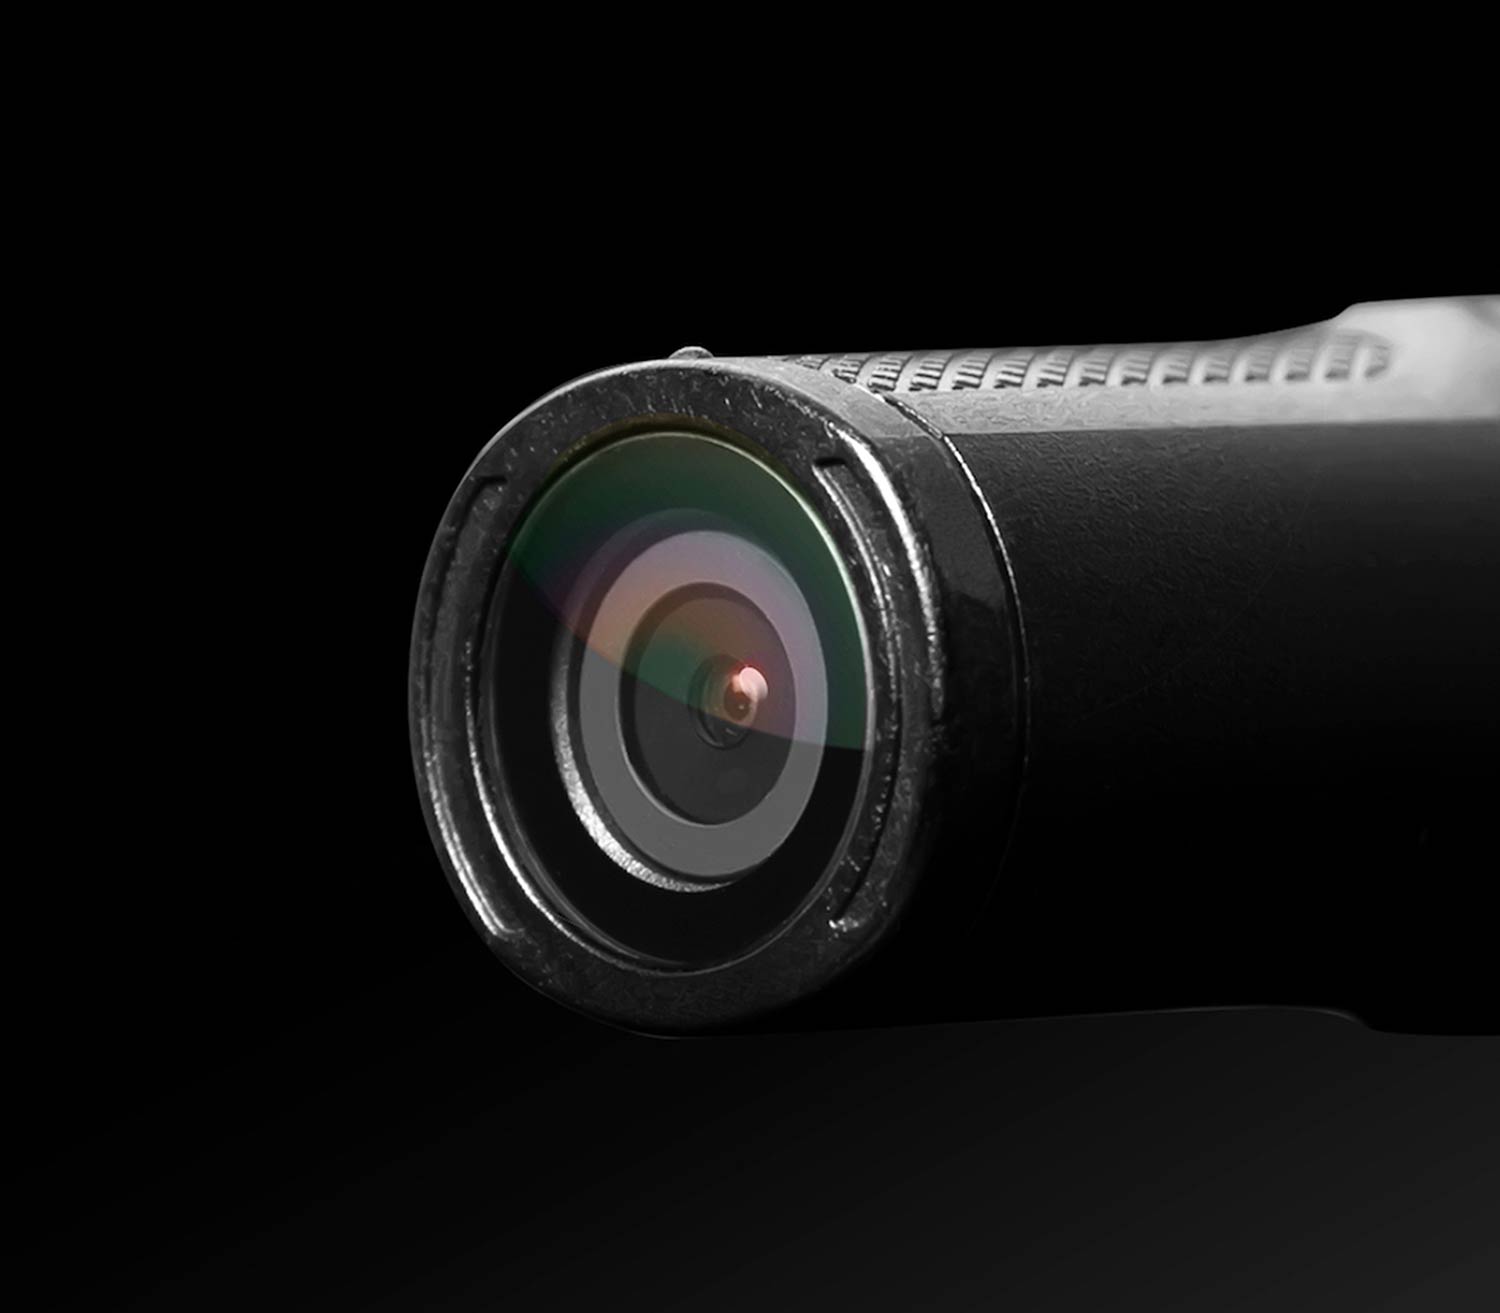 Bodycam Transcend DrivePro Body 60 lente